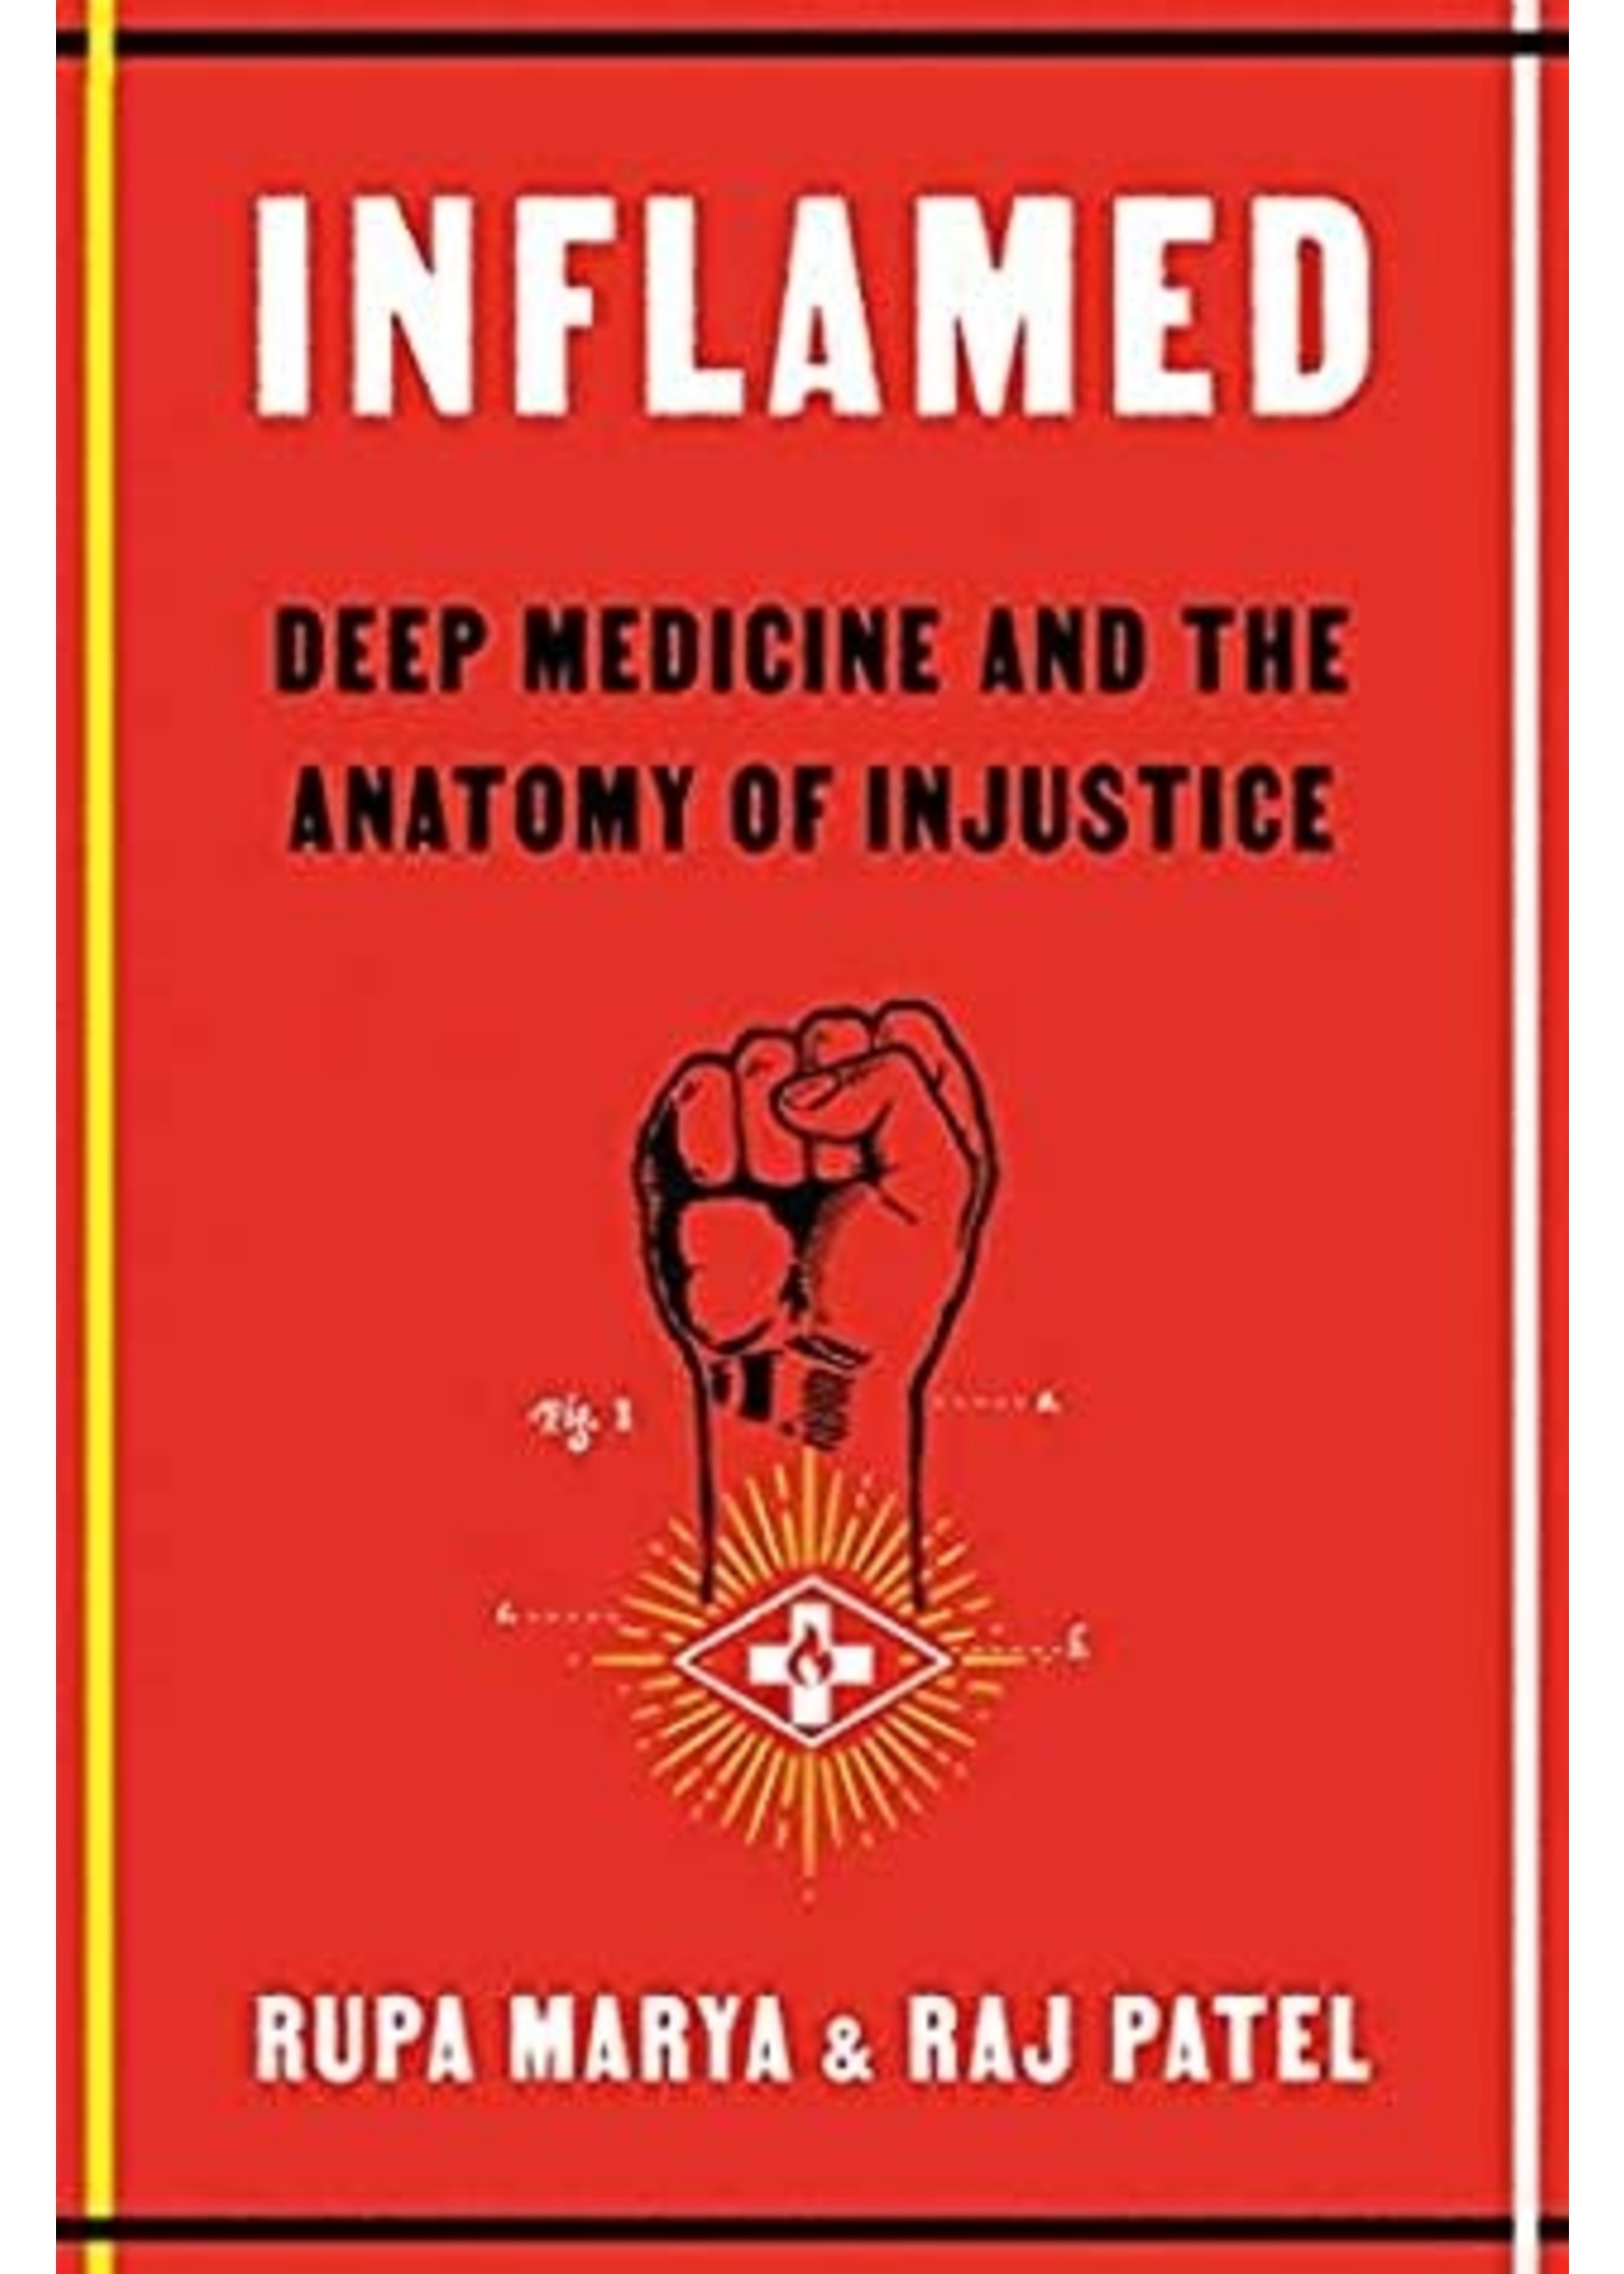 Inflamed: Deep Medicine and the Anatomy of Injustice by Rupa Marya, Raj Patel